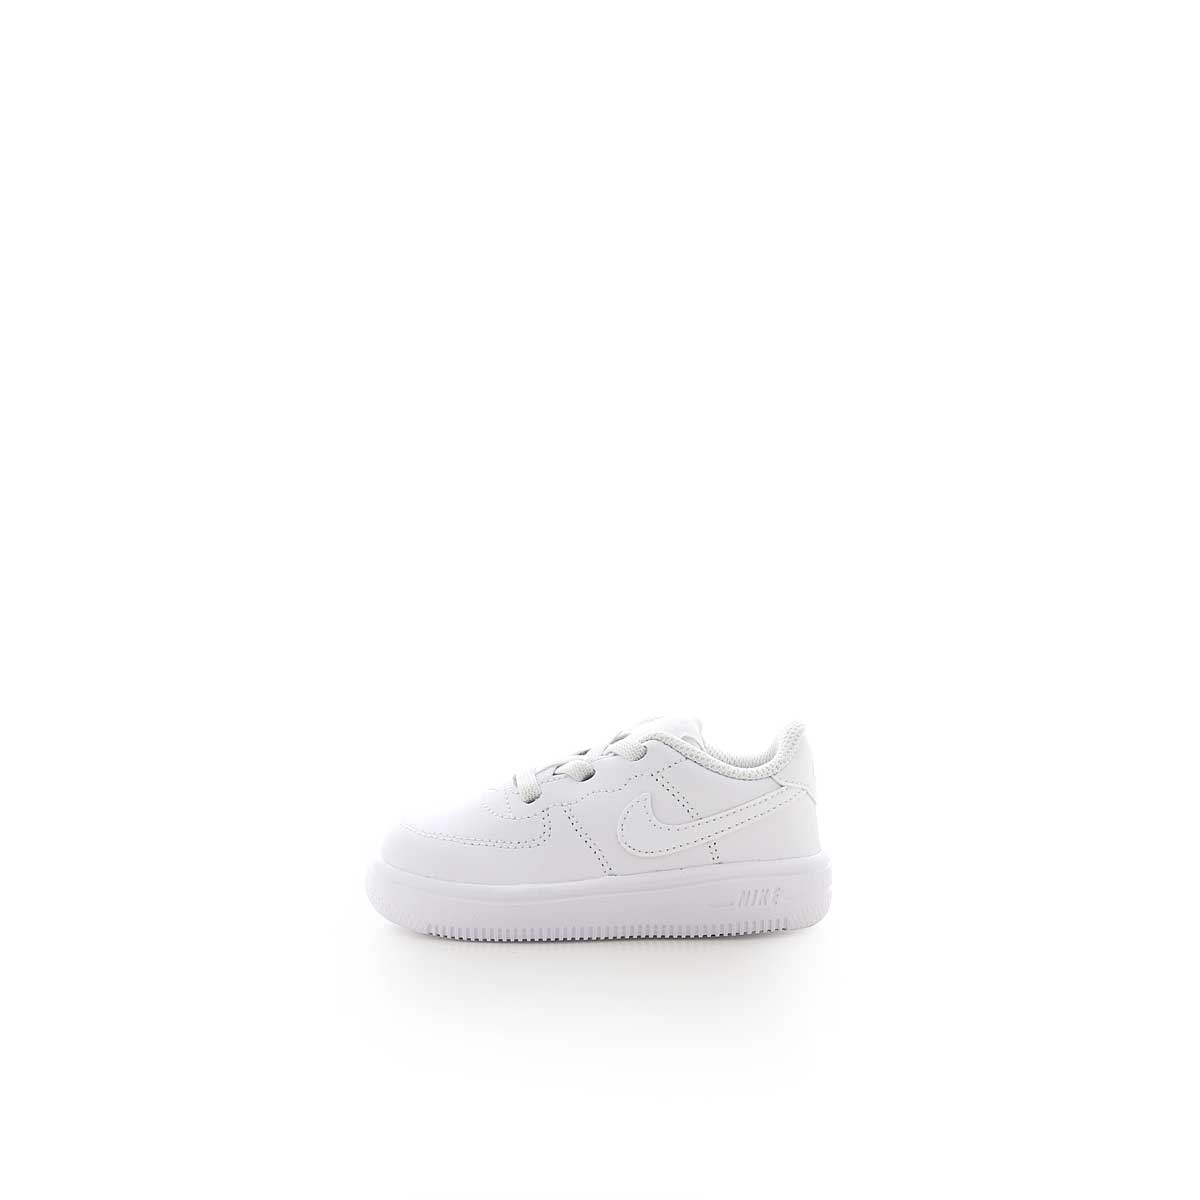 Nike Force 1 '18 (Td), White/White